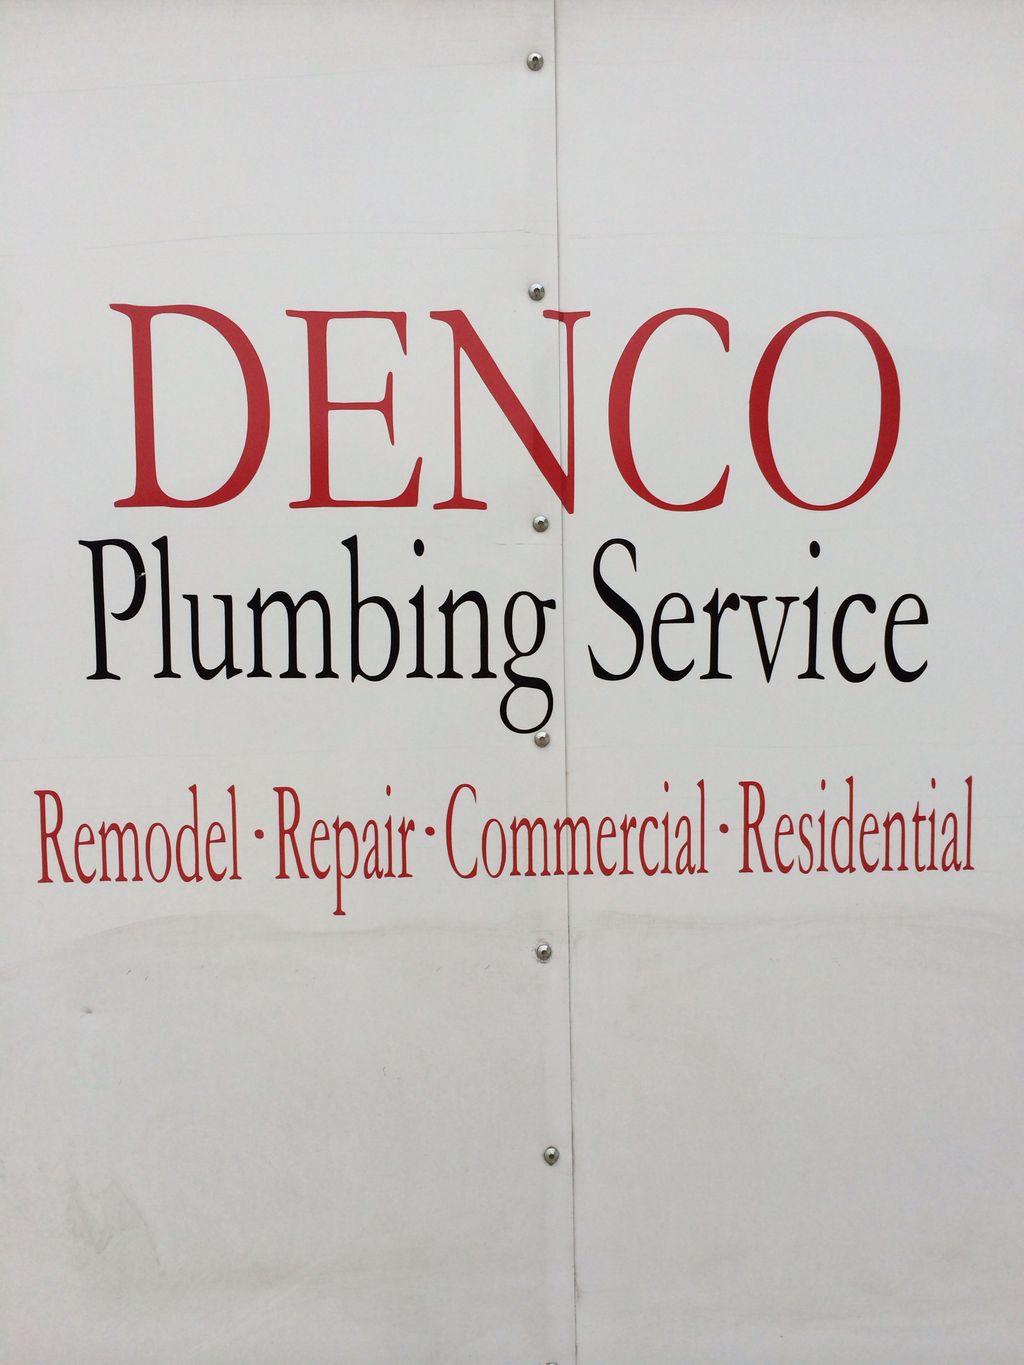 Denco Plumbing Service